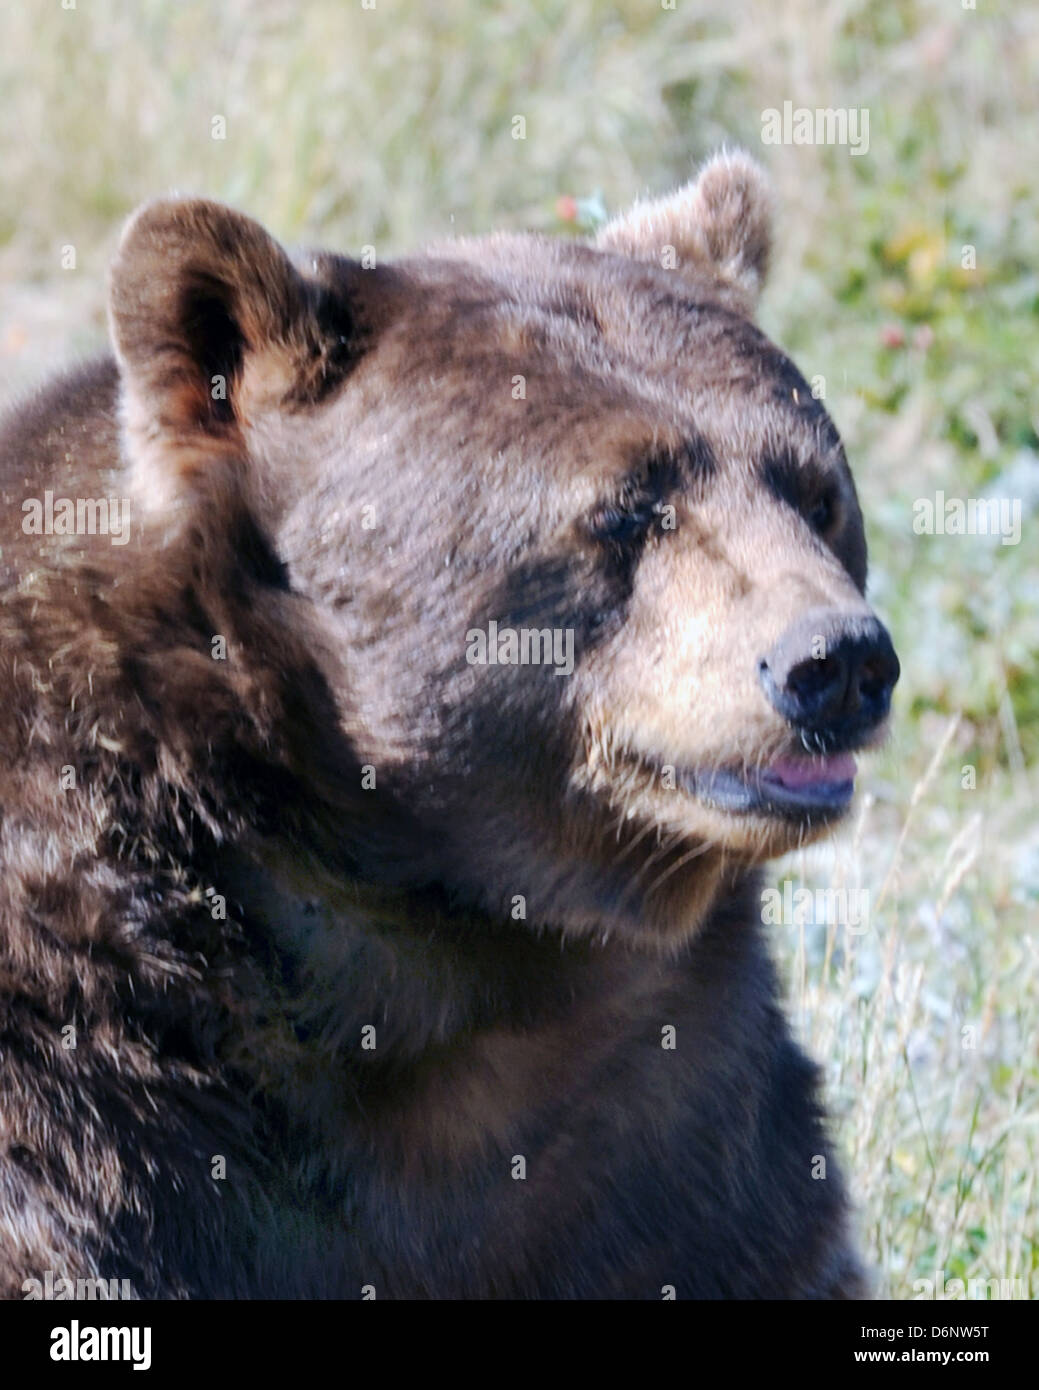 Grizzly North American brown bear Wyoming, American Black bear, Ursus americanus, medium sized bear native to North America, Stock Photo